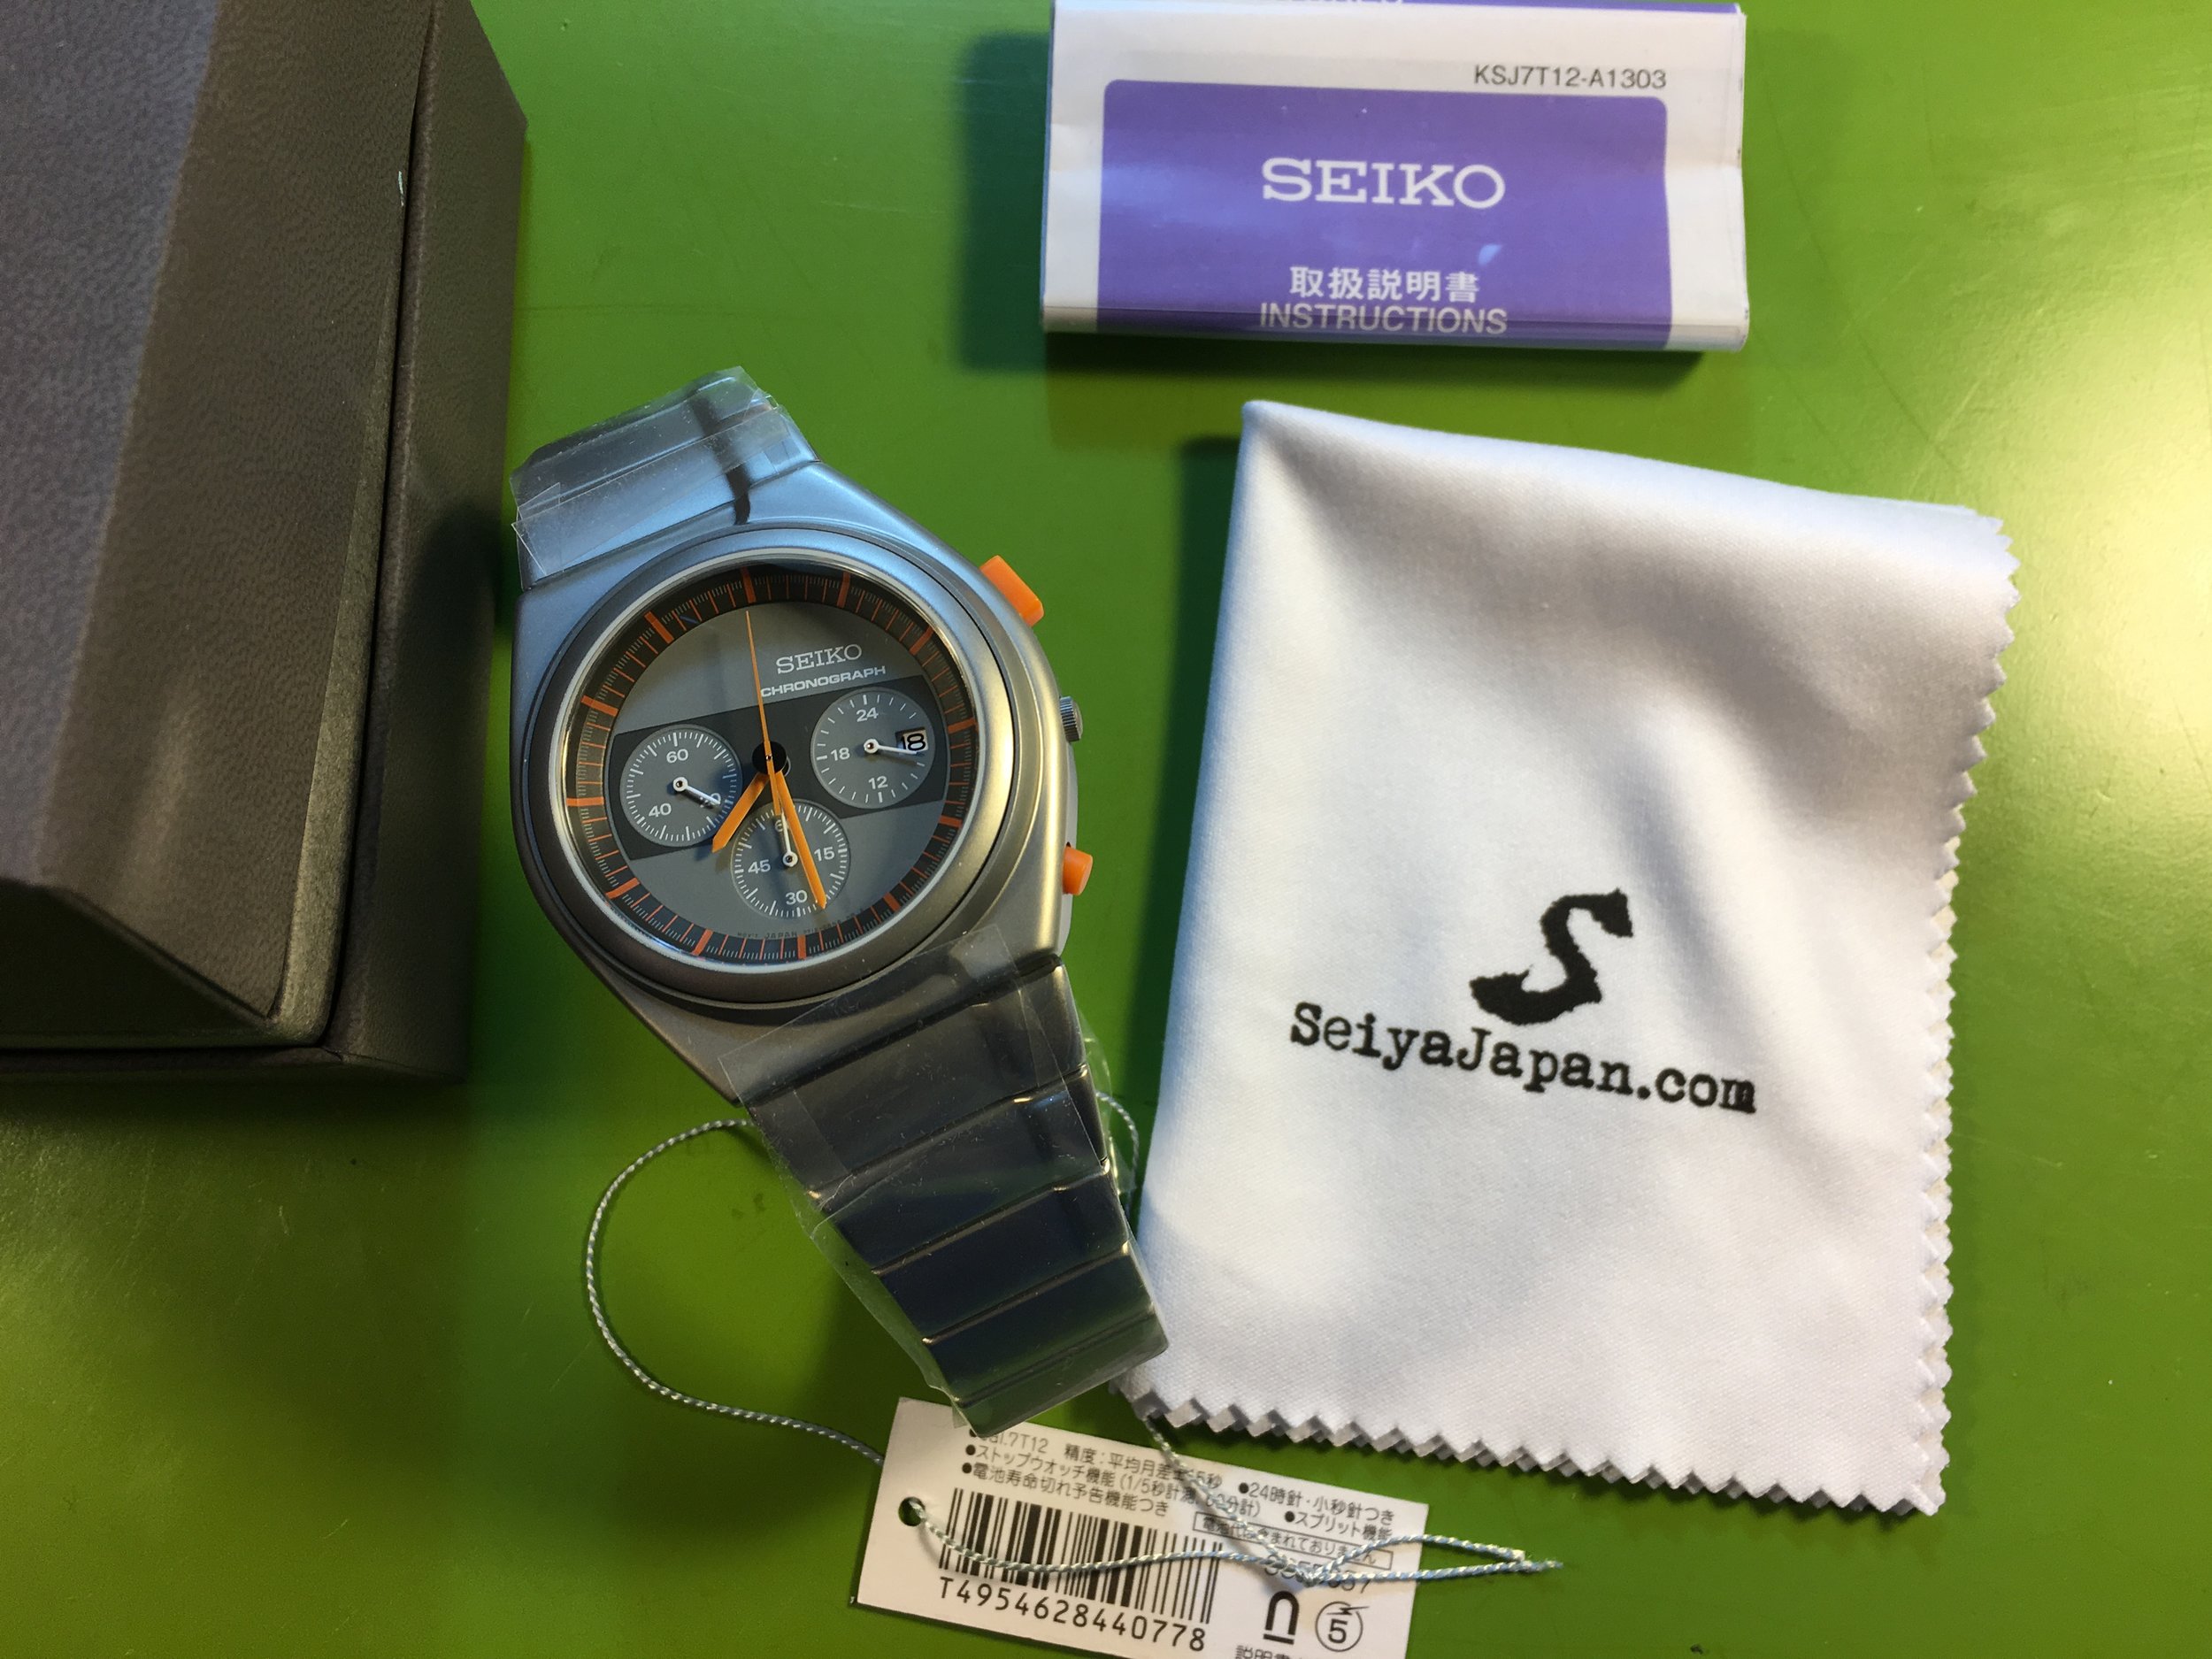 Seiko SCED057 Giugiaro design, limited edition from Seiya Japan — Klein  Vintage Watch